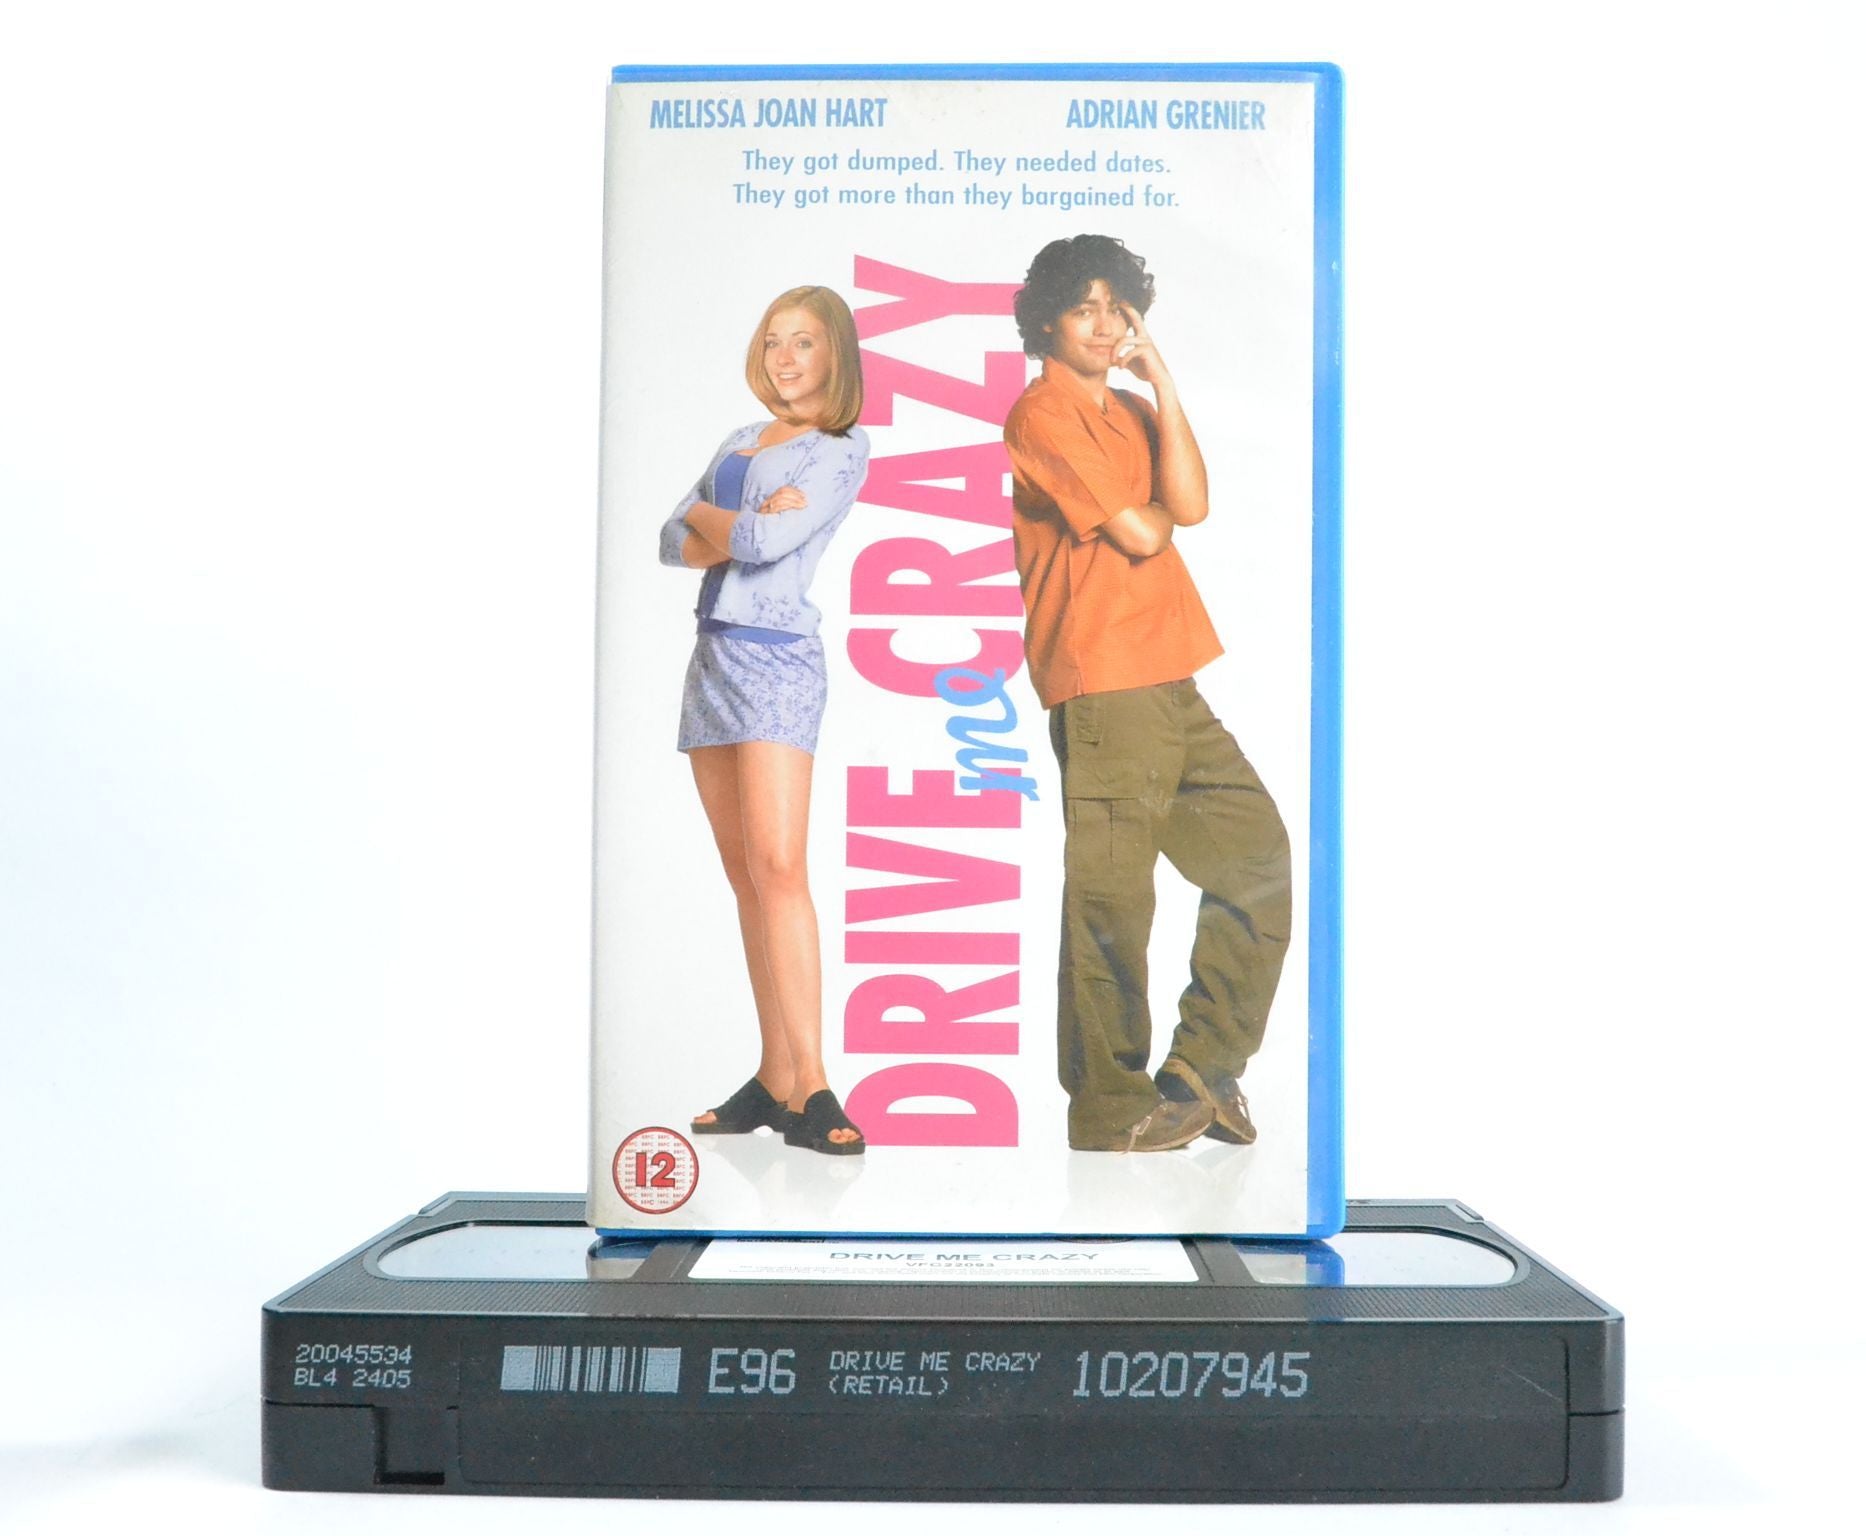 Drive Me Crazy: Melissa Joan Hart - Teen Feel Good [Jealousy] Comedy (1999) VHS-